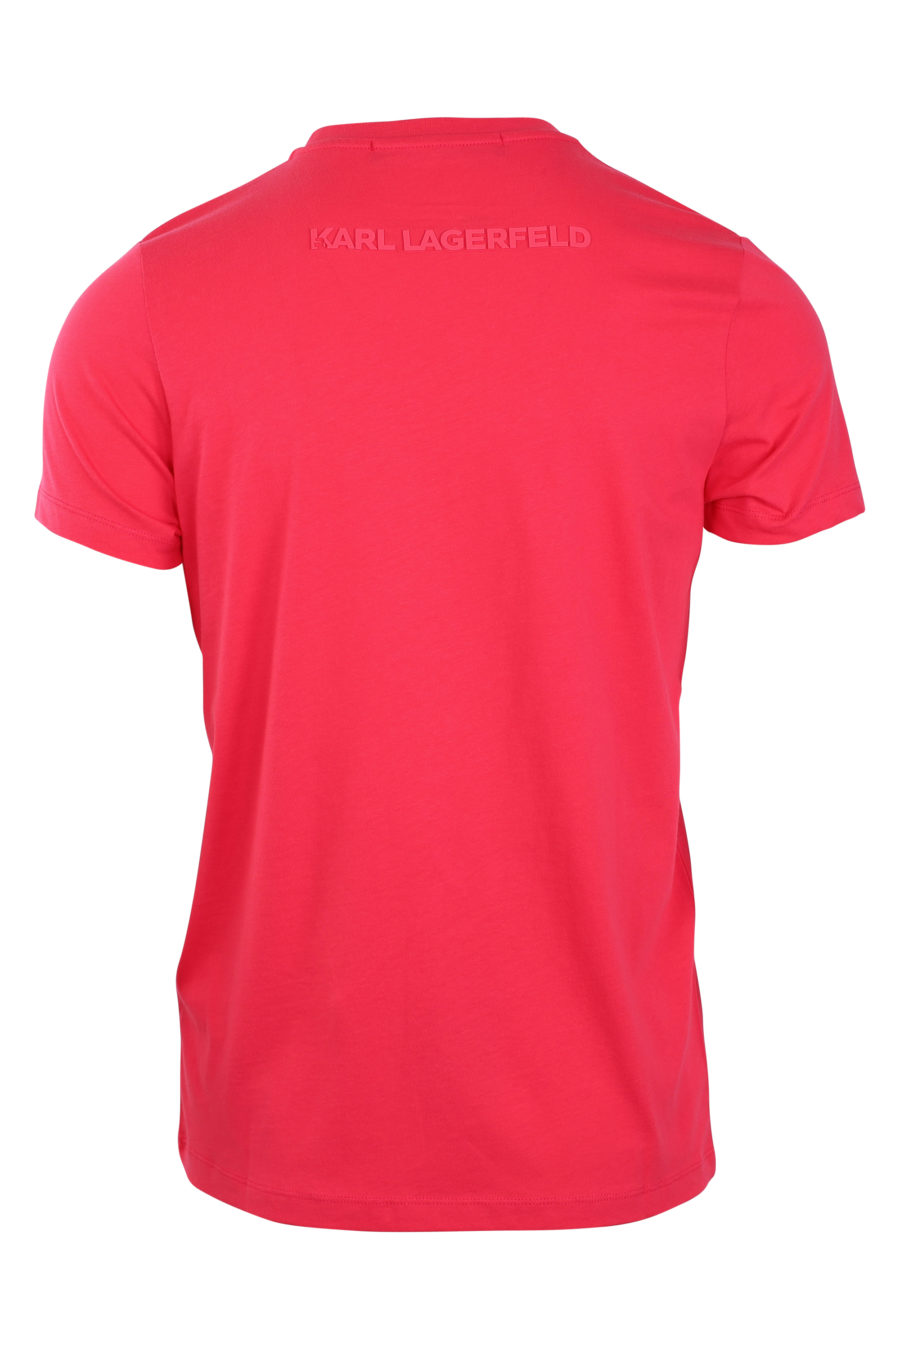 Fuchsia T-shirt with logo in monochrome silhouette - IMG 0841